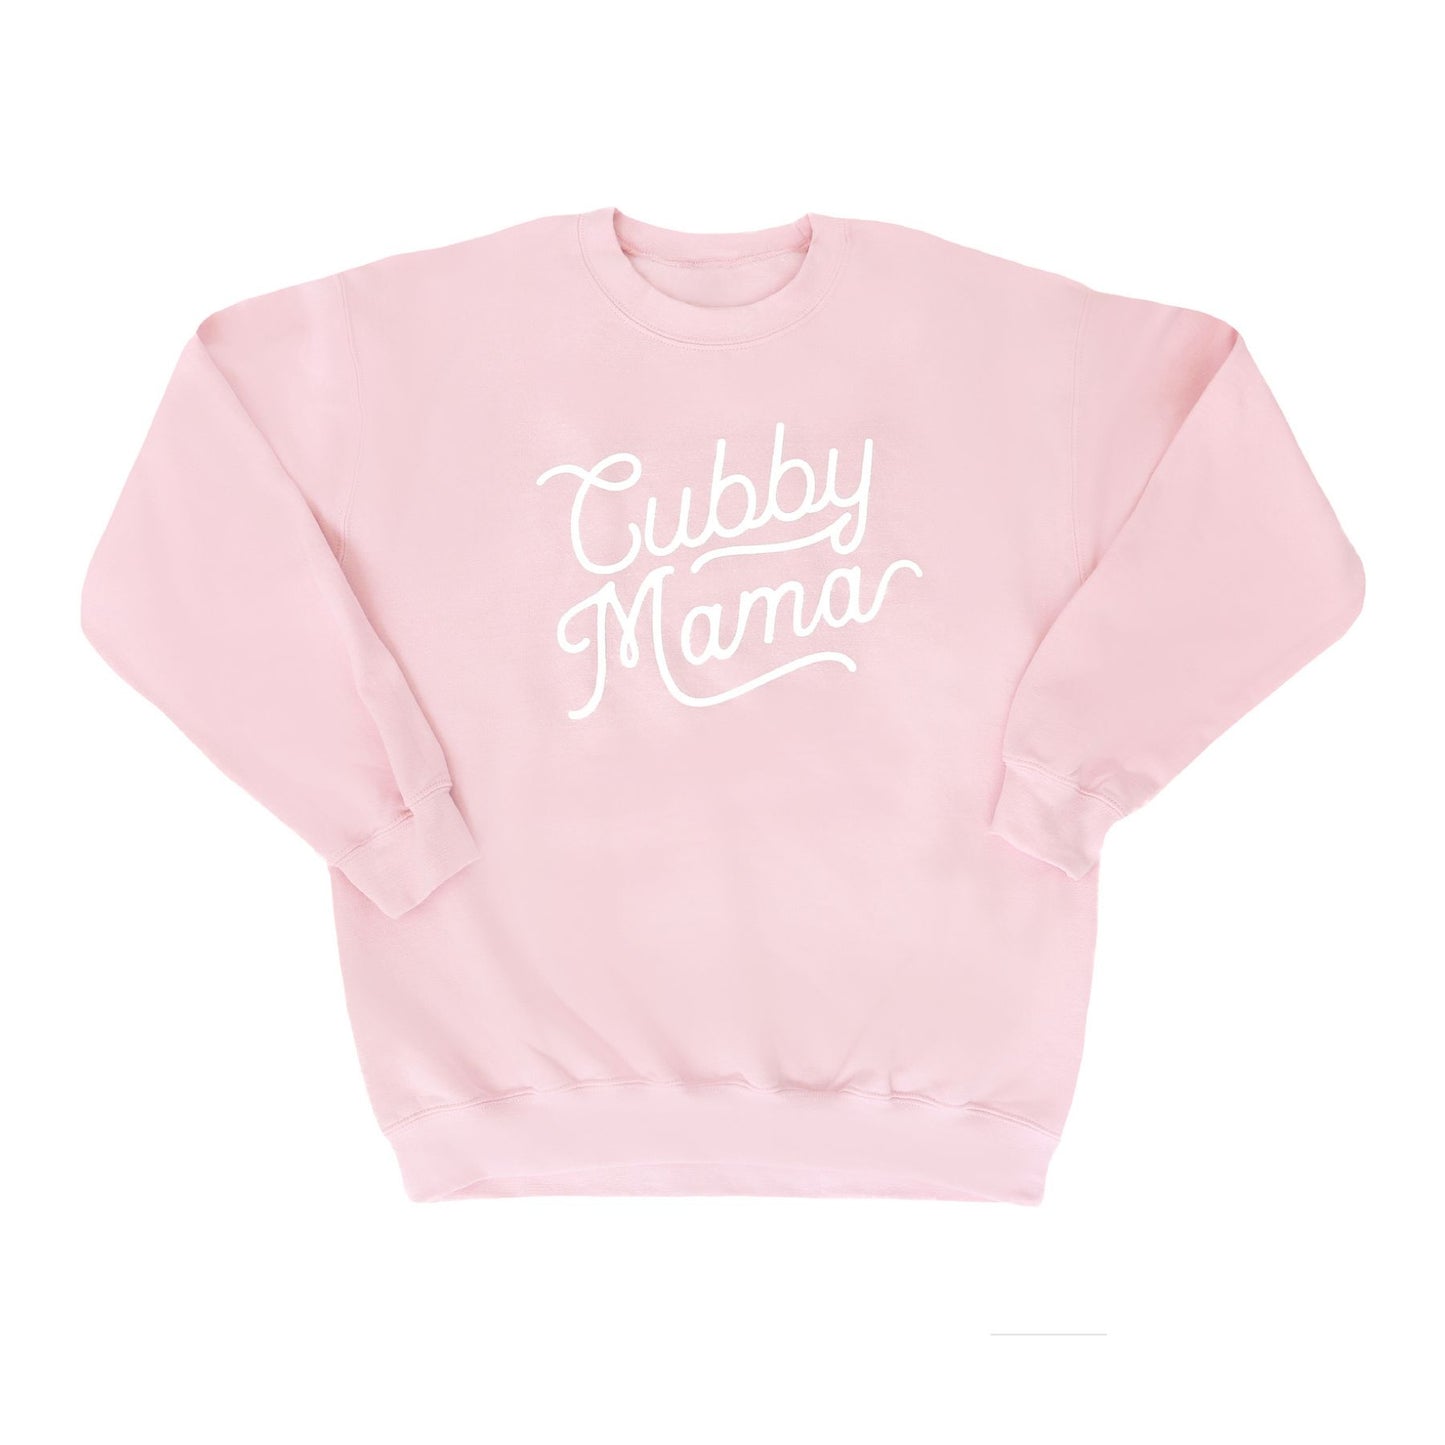 The Baby Cubby Crewneck Sweatshirt - Cubby Mama - Light Pink